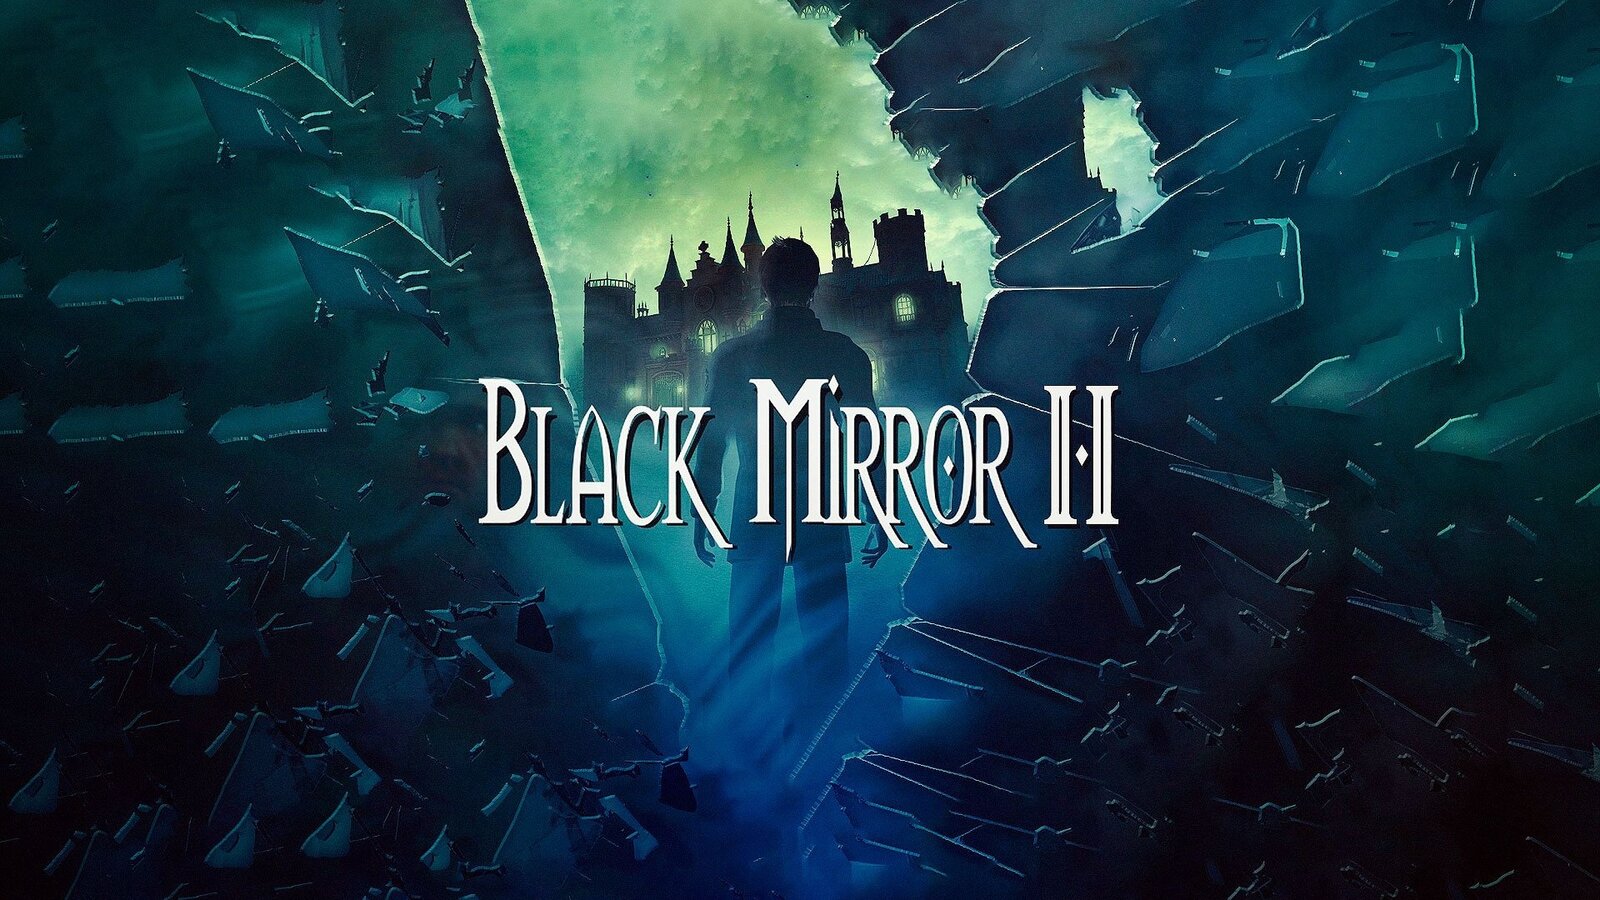 Black Mirror II